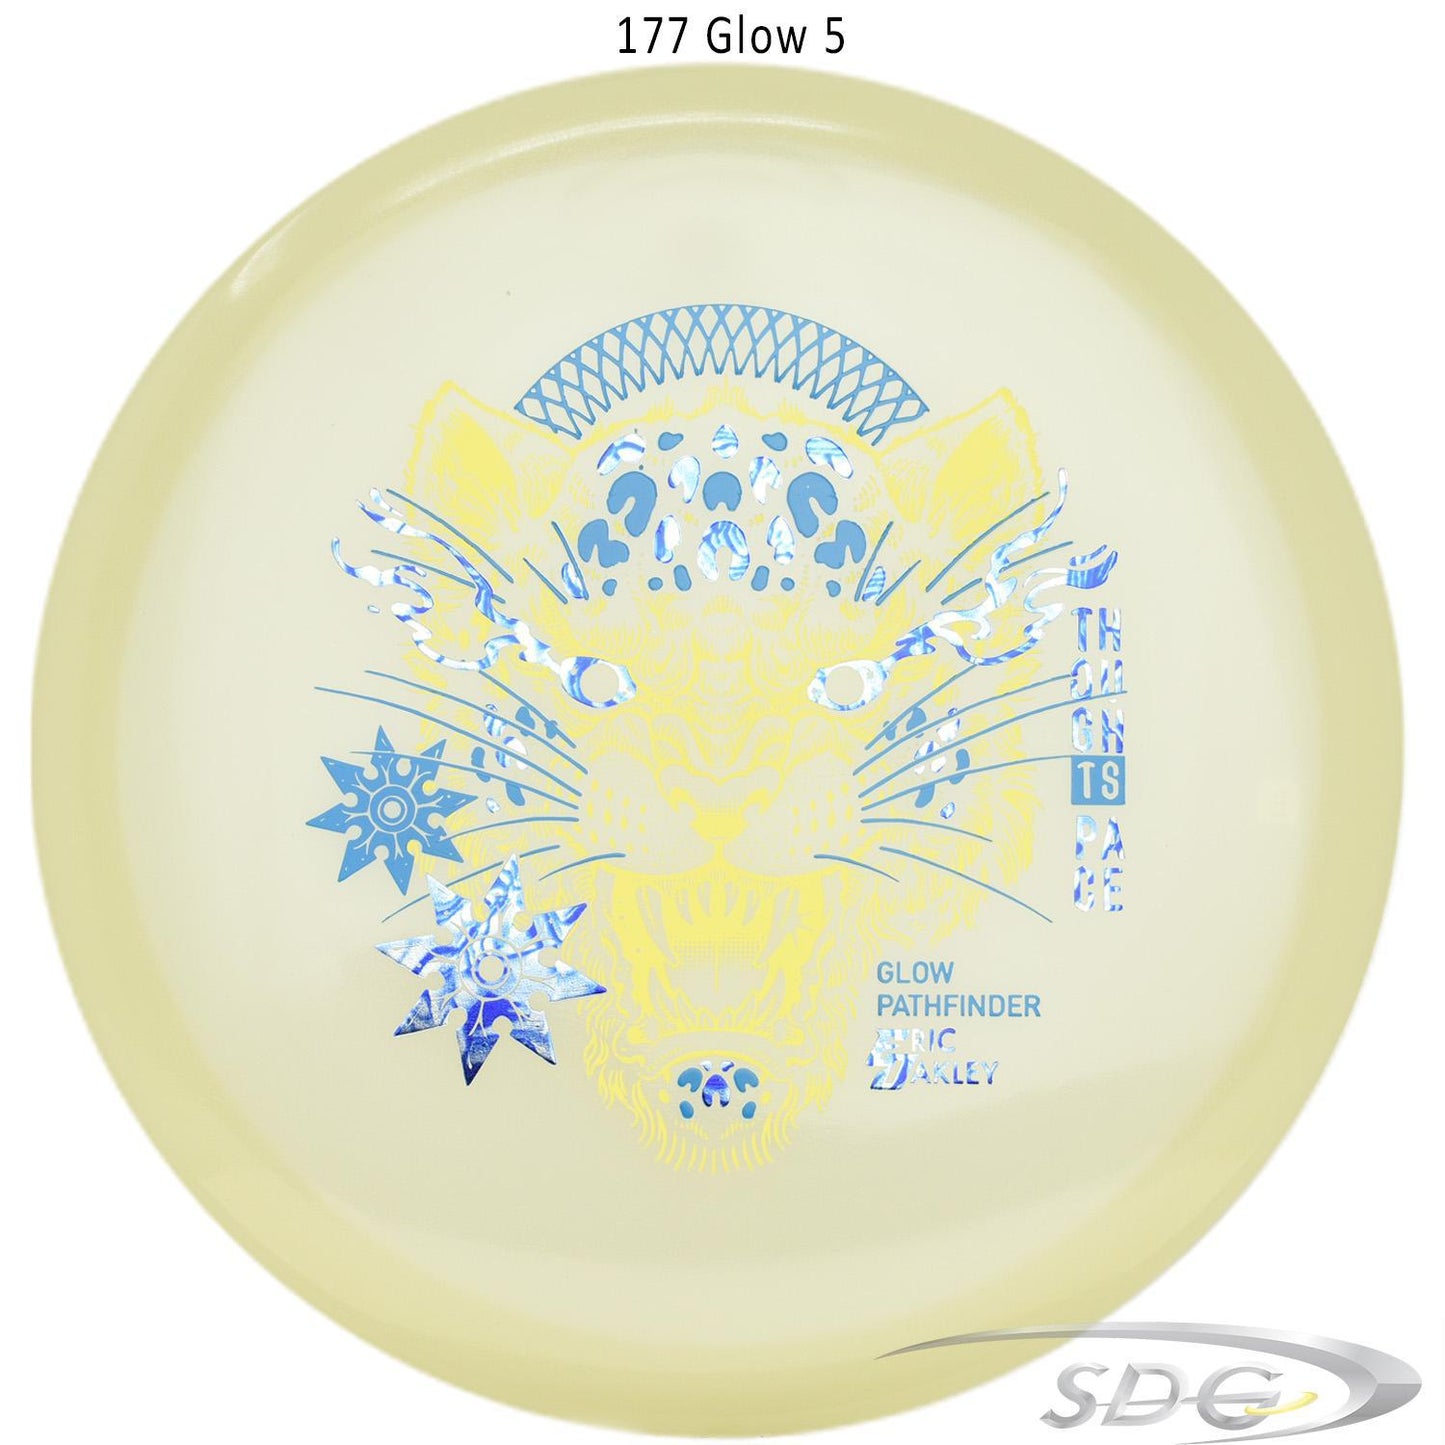 tsa-glow-pathfinder-eric-oakley-snow-leopard-disc-golf-mid-range 177 Glow 5 